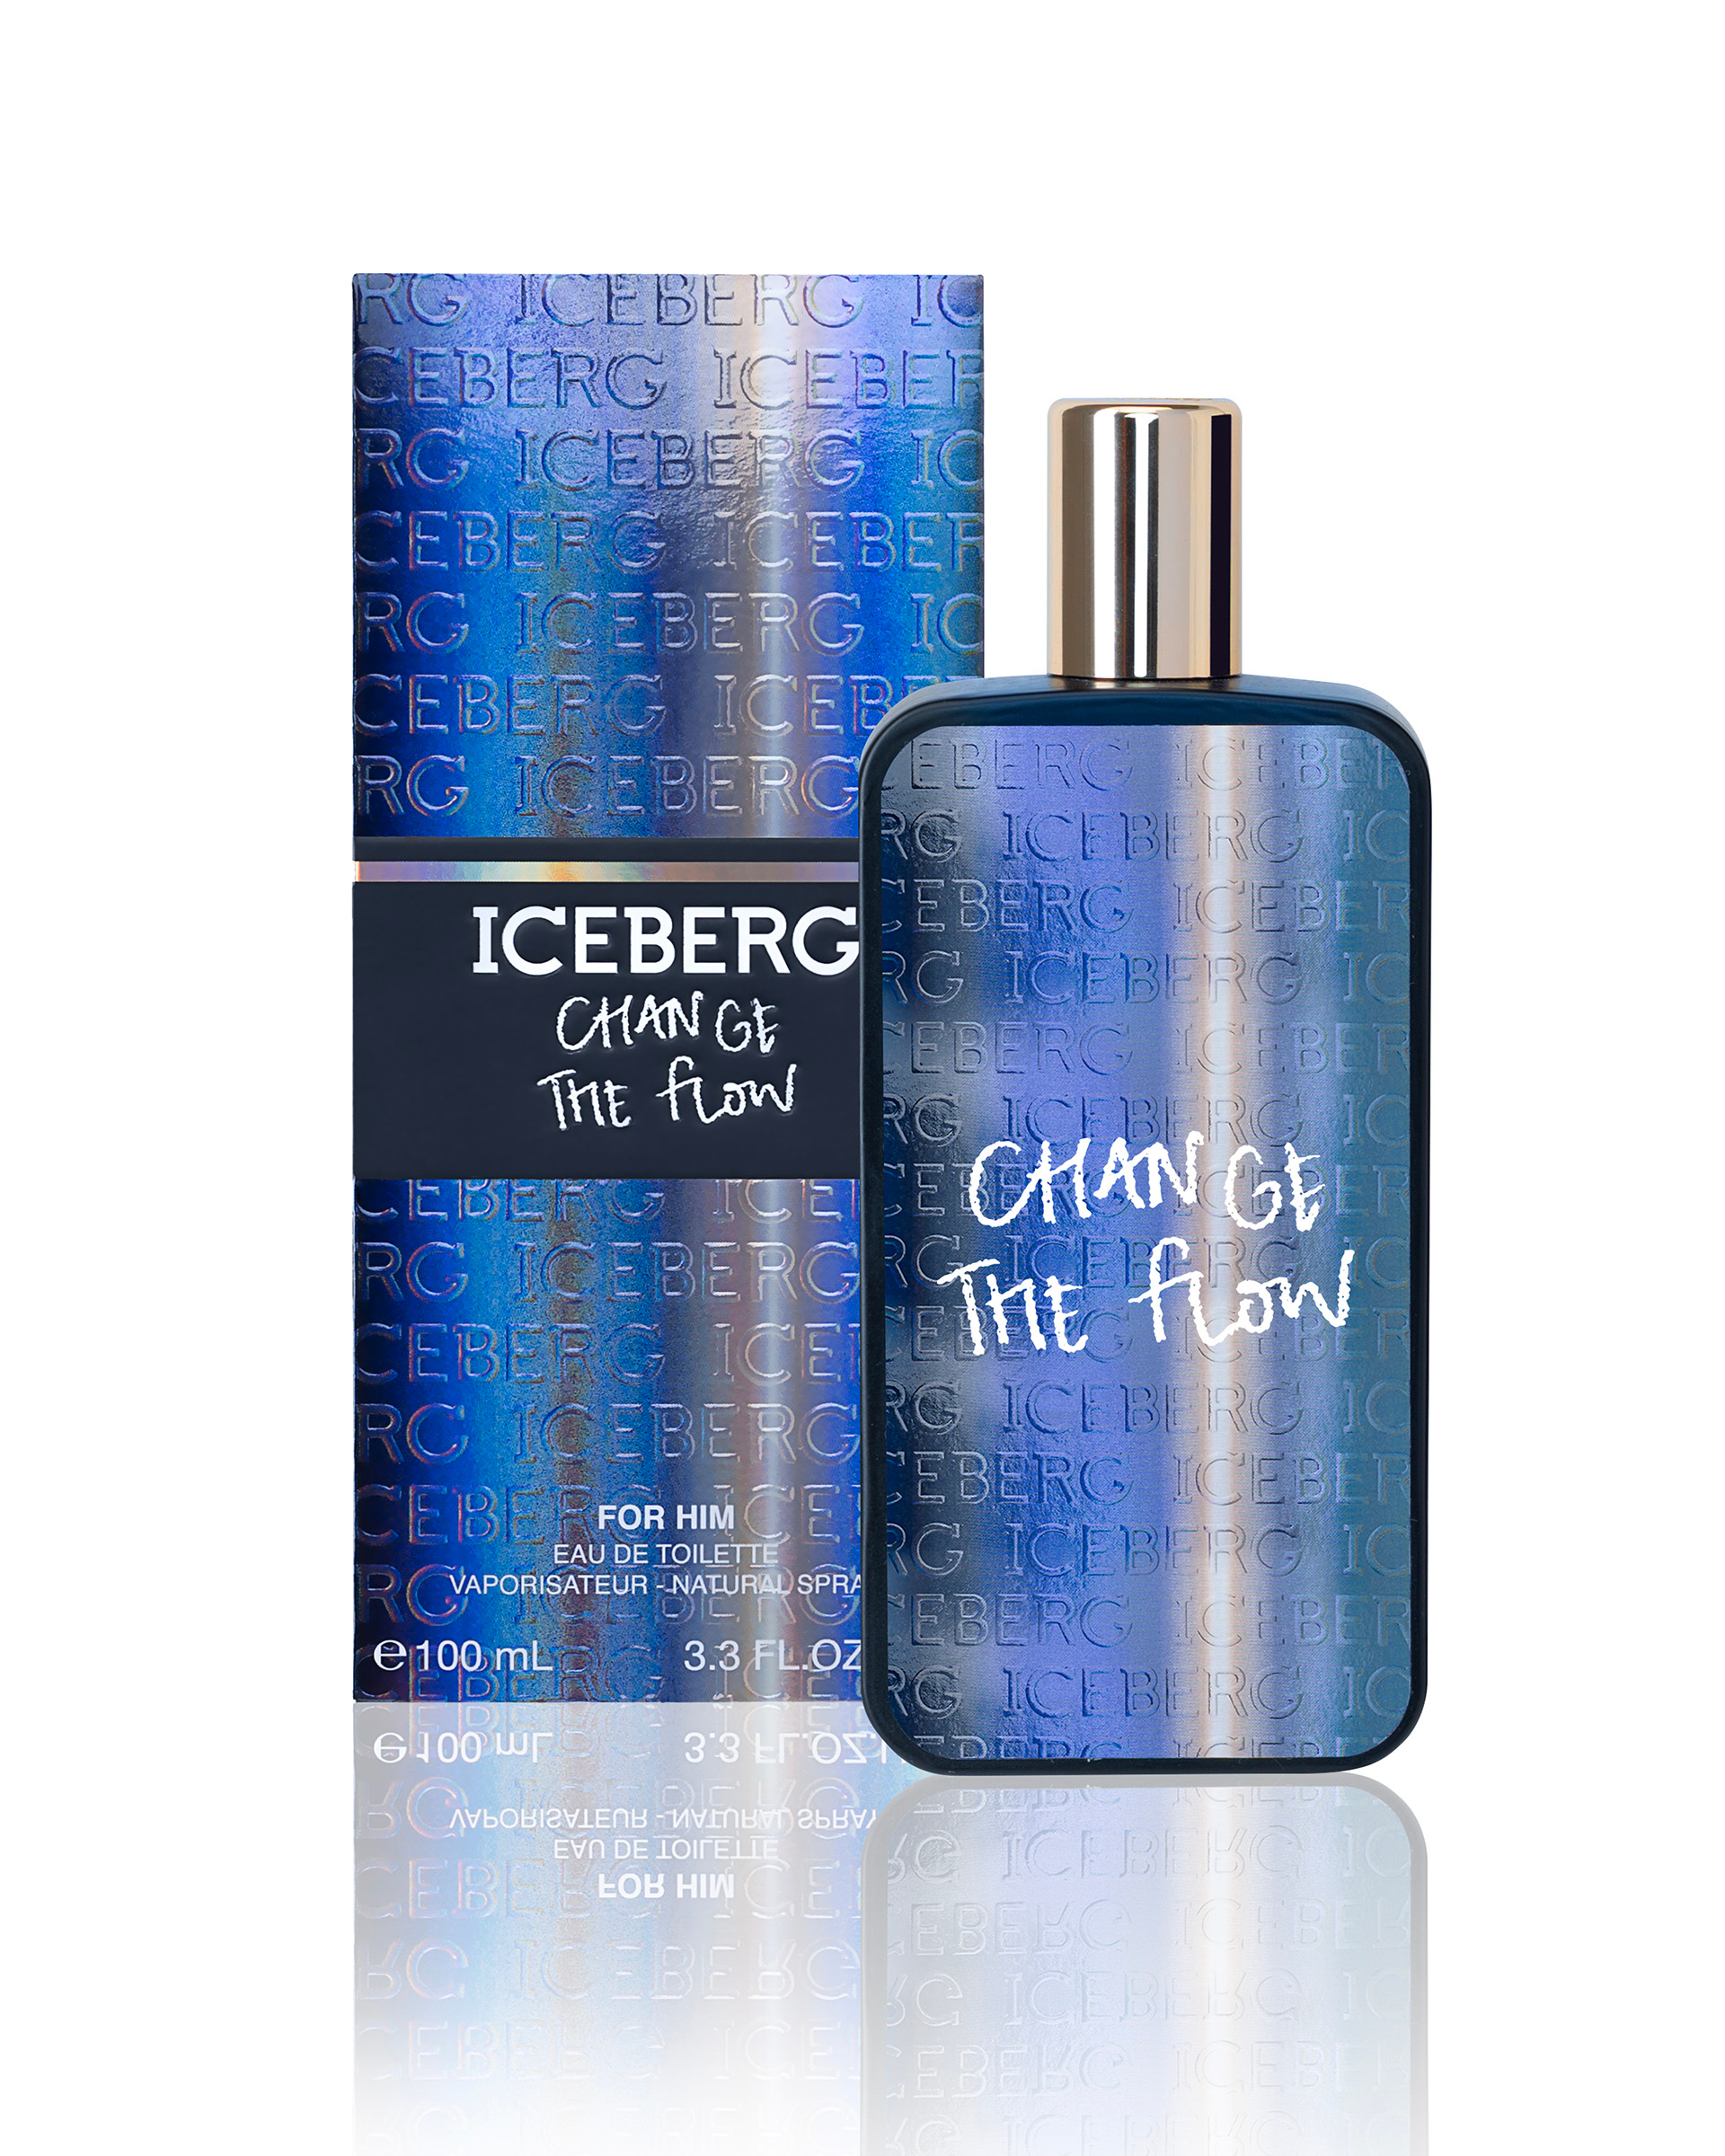 The CHANGE THE FLOW fragrance | Iceberg